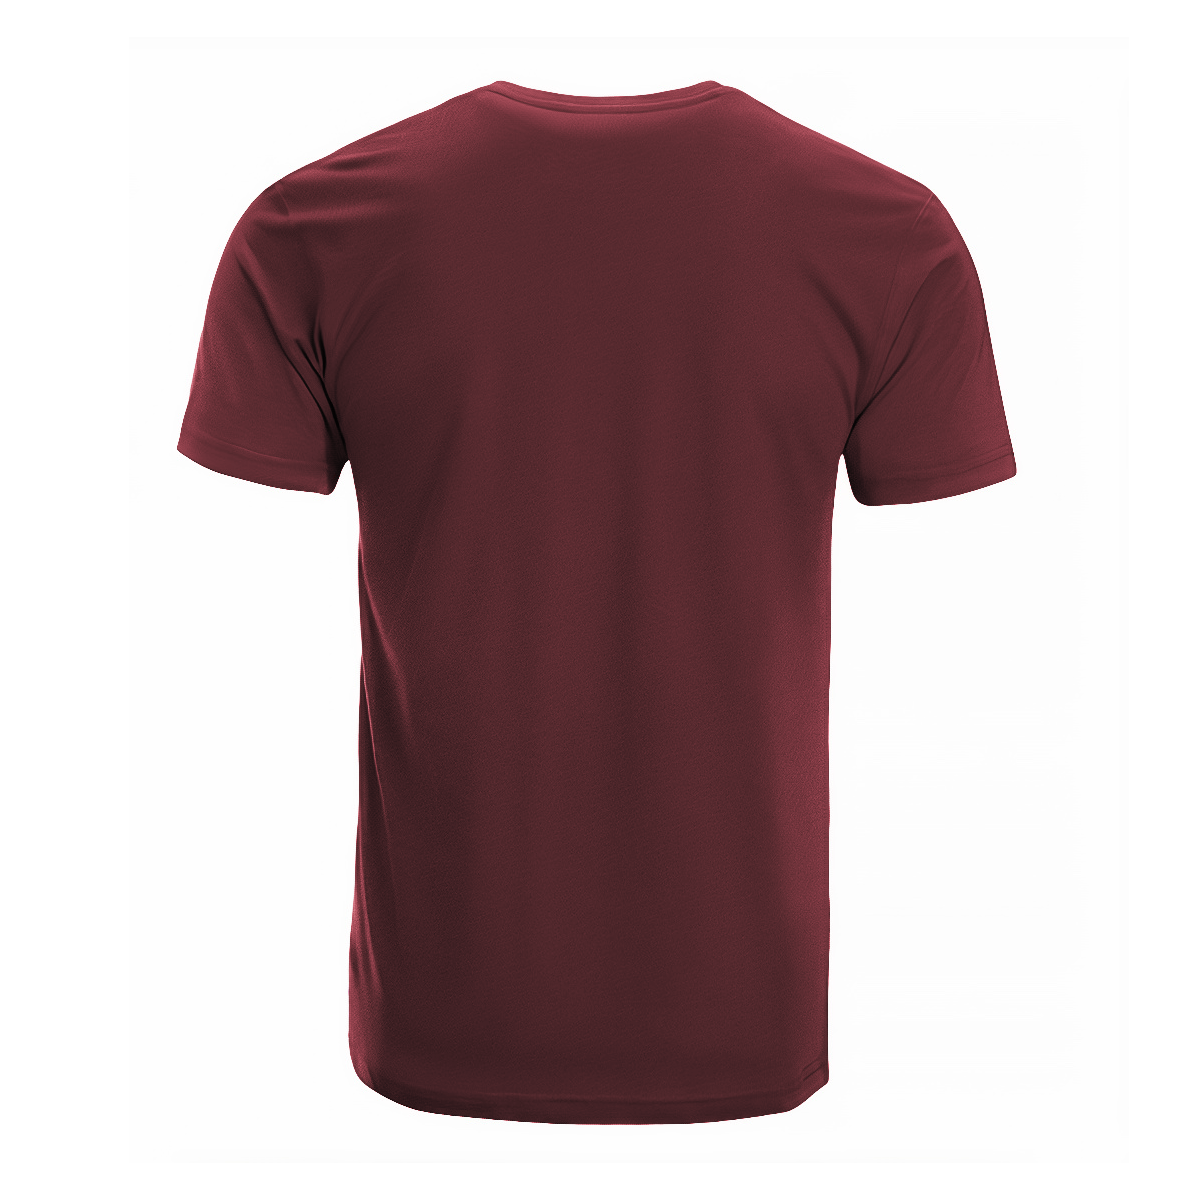 Glen Tartan Crest T-shirt - I'm not yelling style